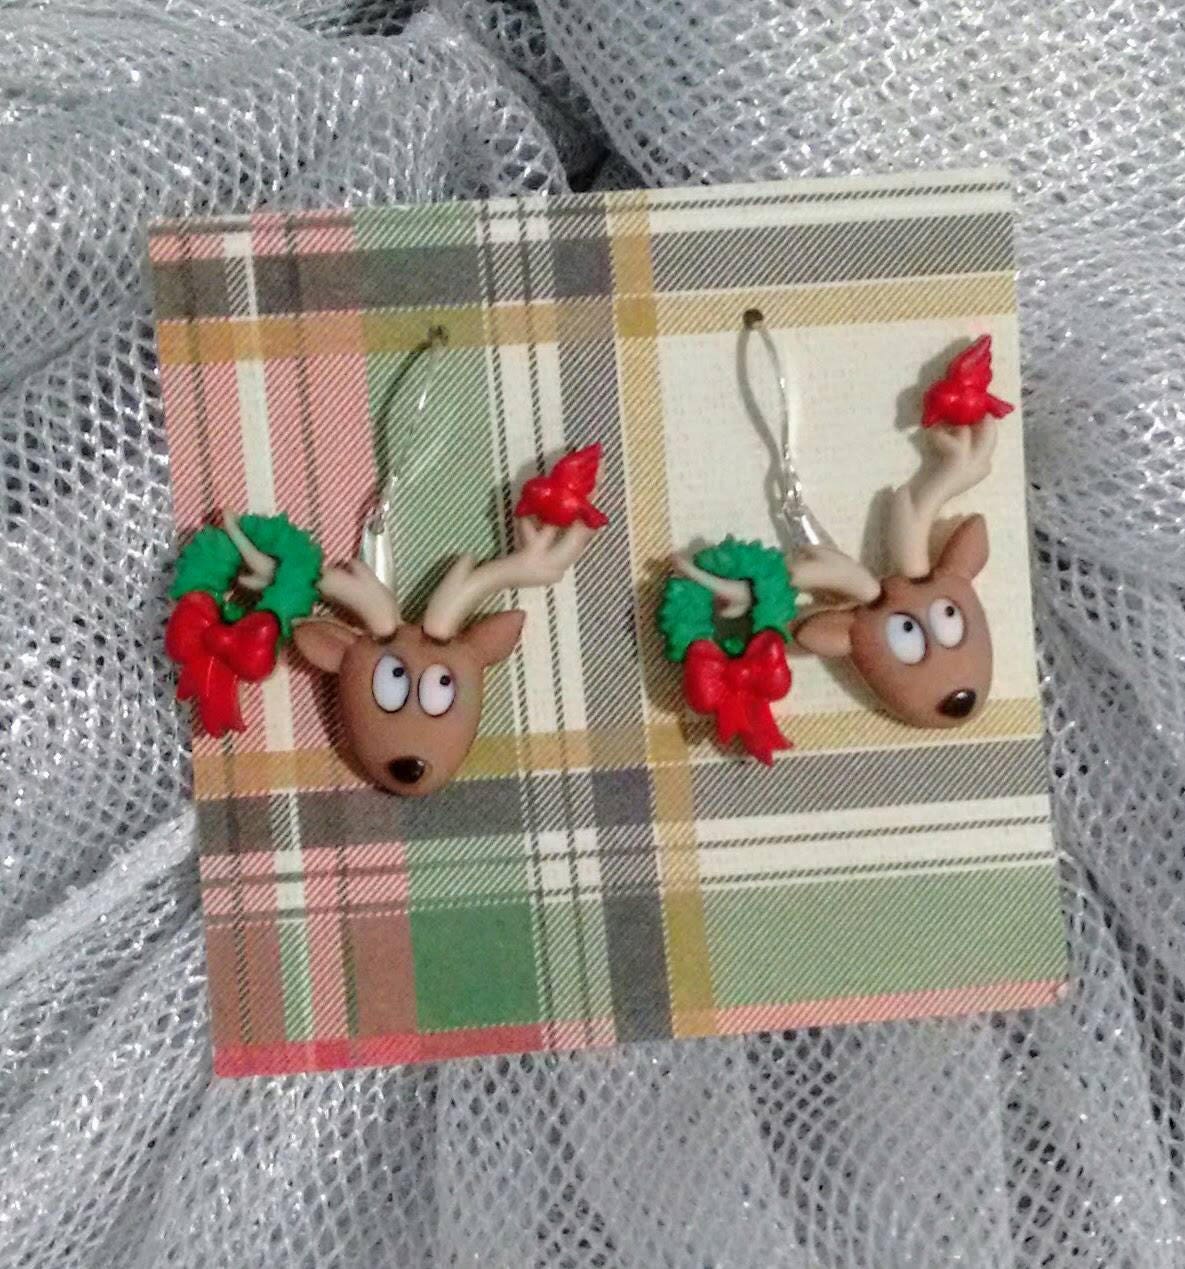 Funny Christmas reindeer with wreath earrings